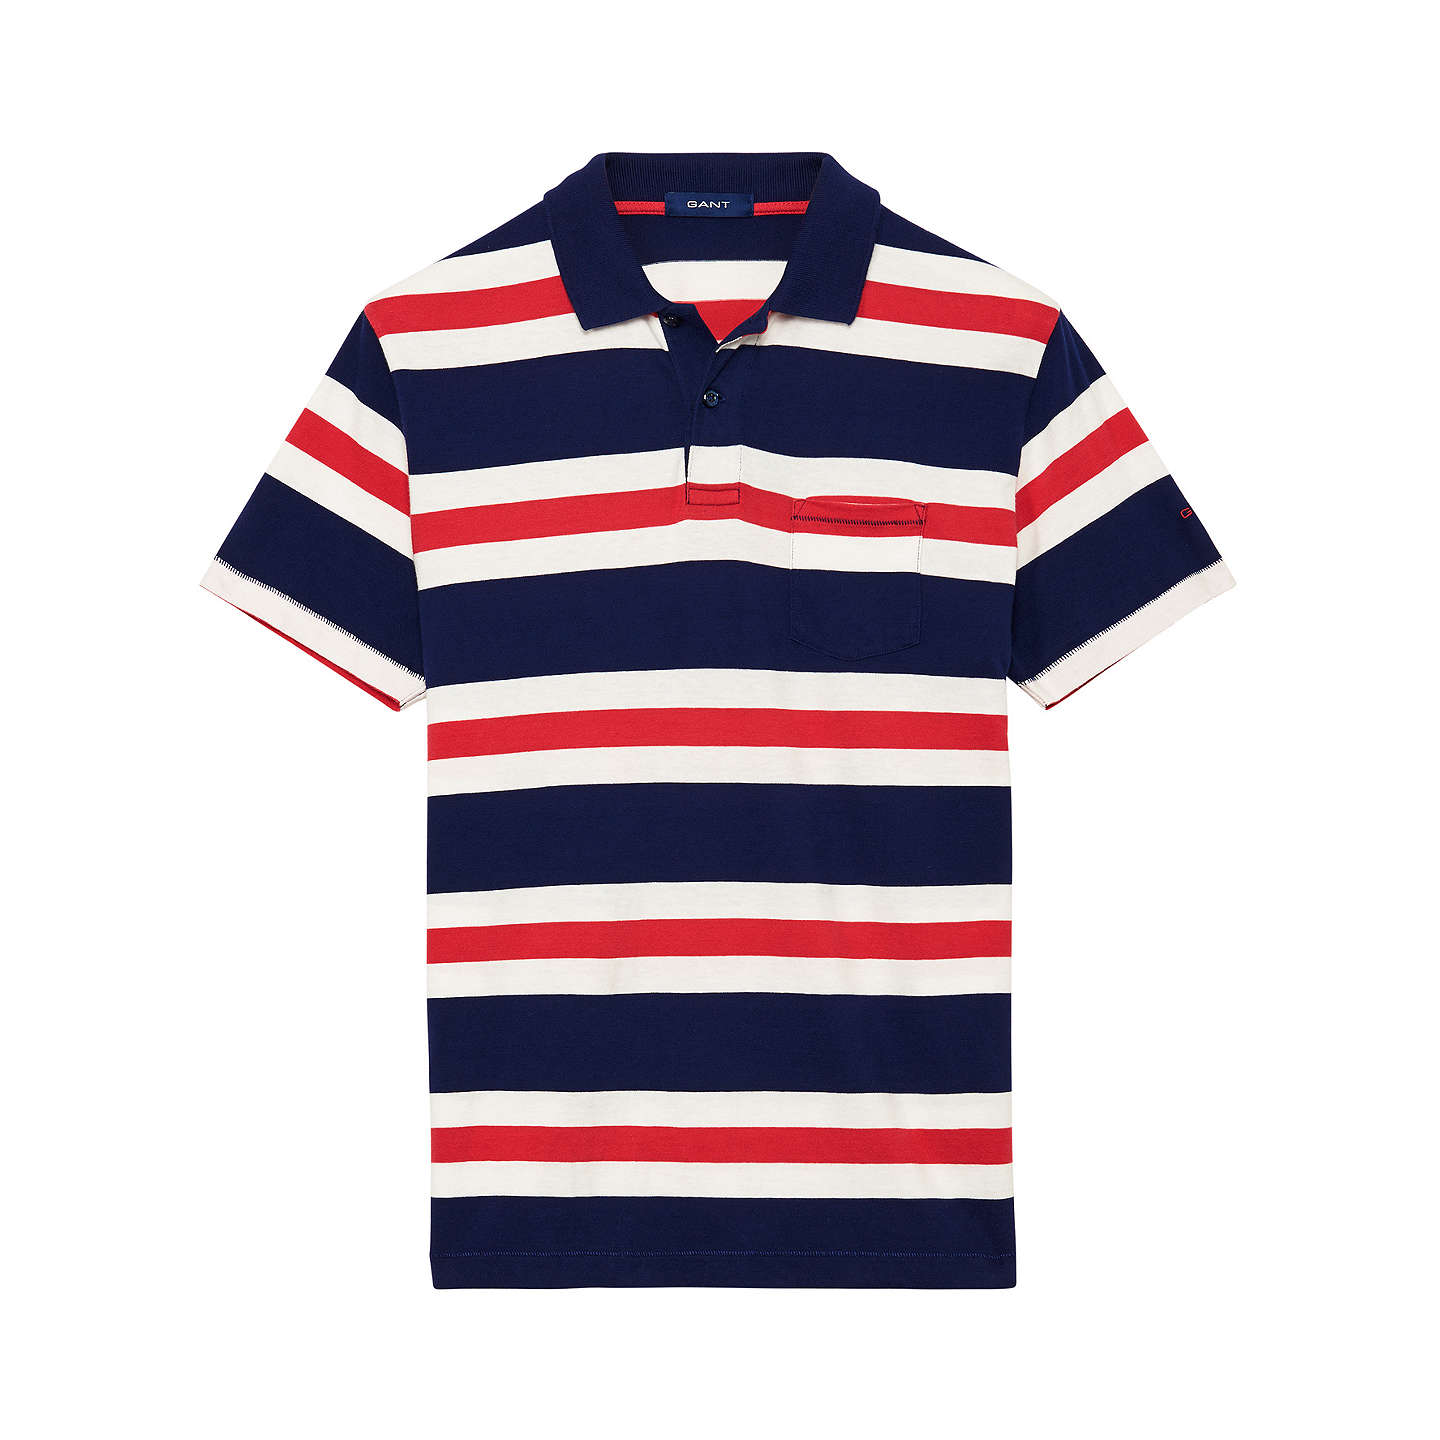 Gant Three Colour Stripe Polo Shirt, Ink Blue/Red/White at John Lewis